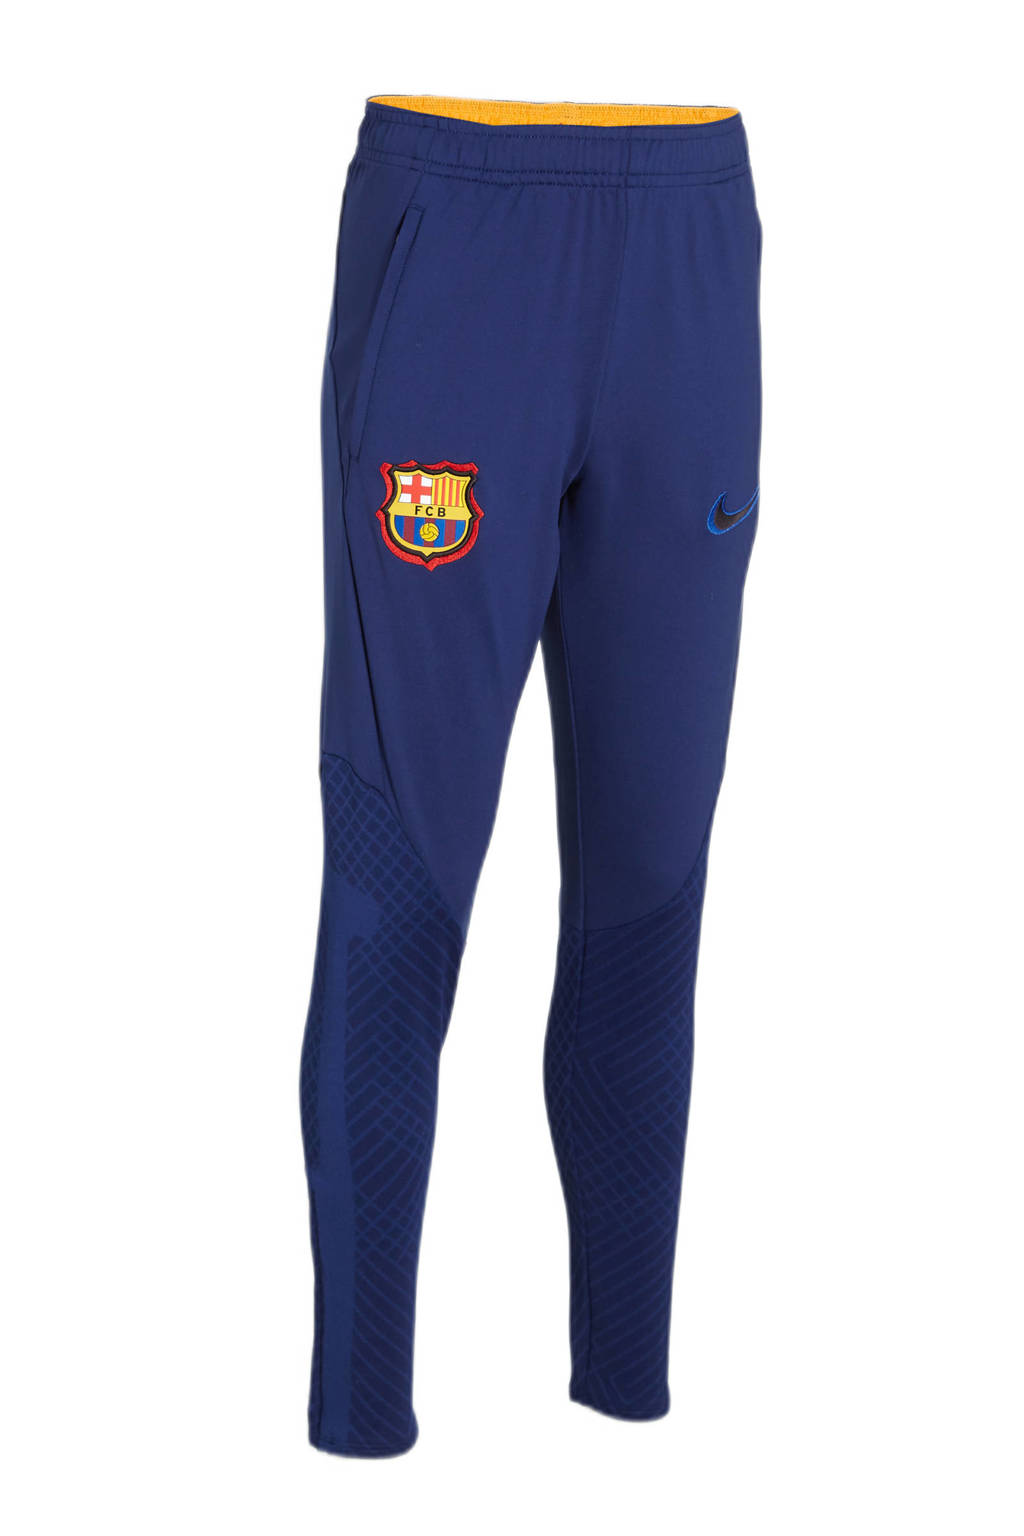 Nike Junior FC Barcelona voetbalbroek donkerblauw/oranje